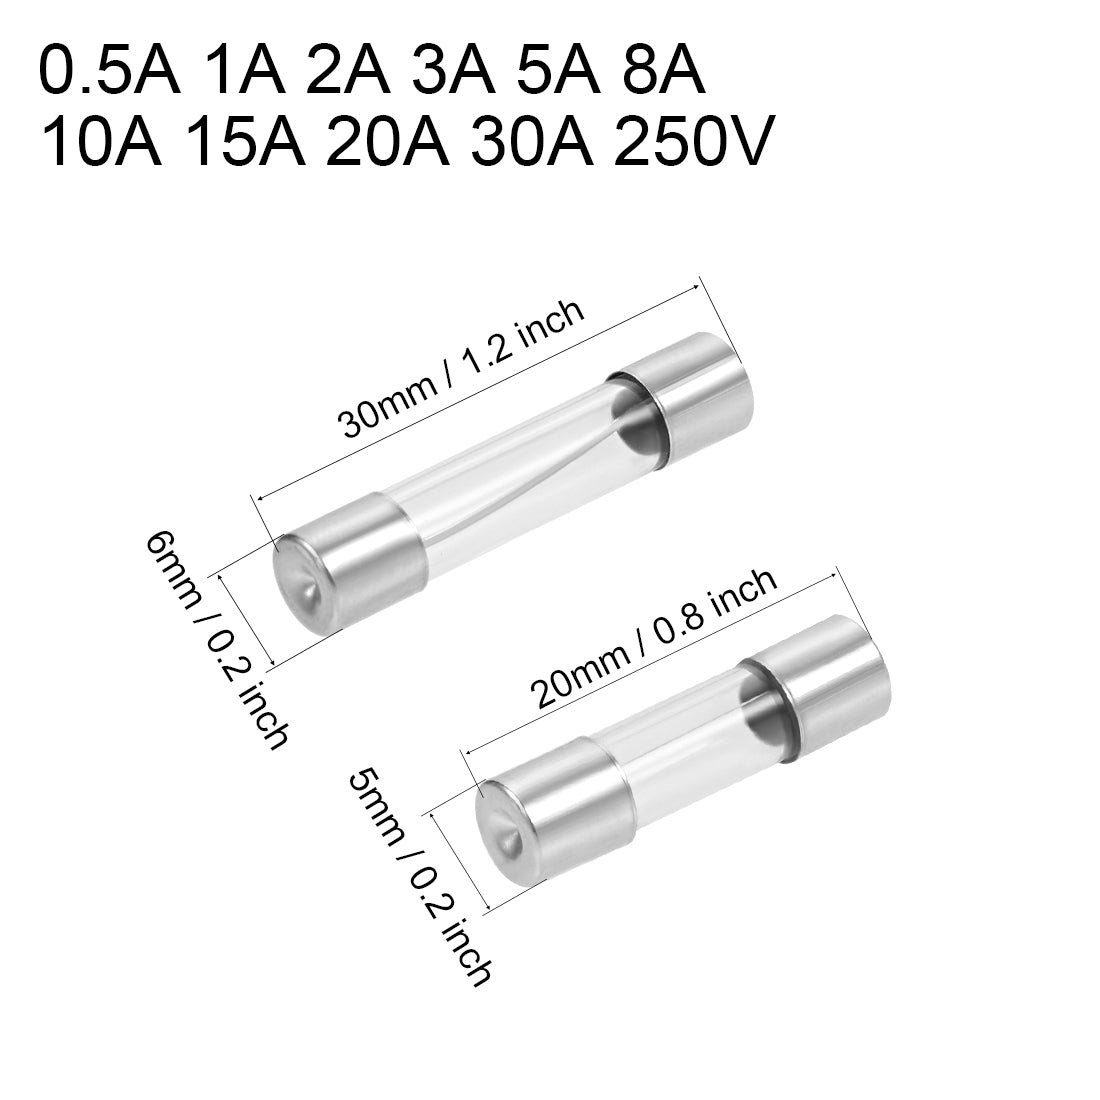 uxcell Uxcell Automotive Cartridge Fuse 0.5A 1A 2A 3A 5A 8A 10A 15A 20A 30A 250V 5x20mm 6x30mm Fast Blow Replacement for Car Audio Amplifier Glass 50pcs